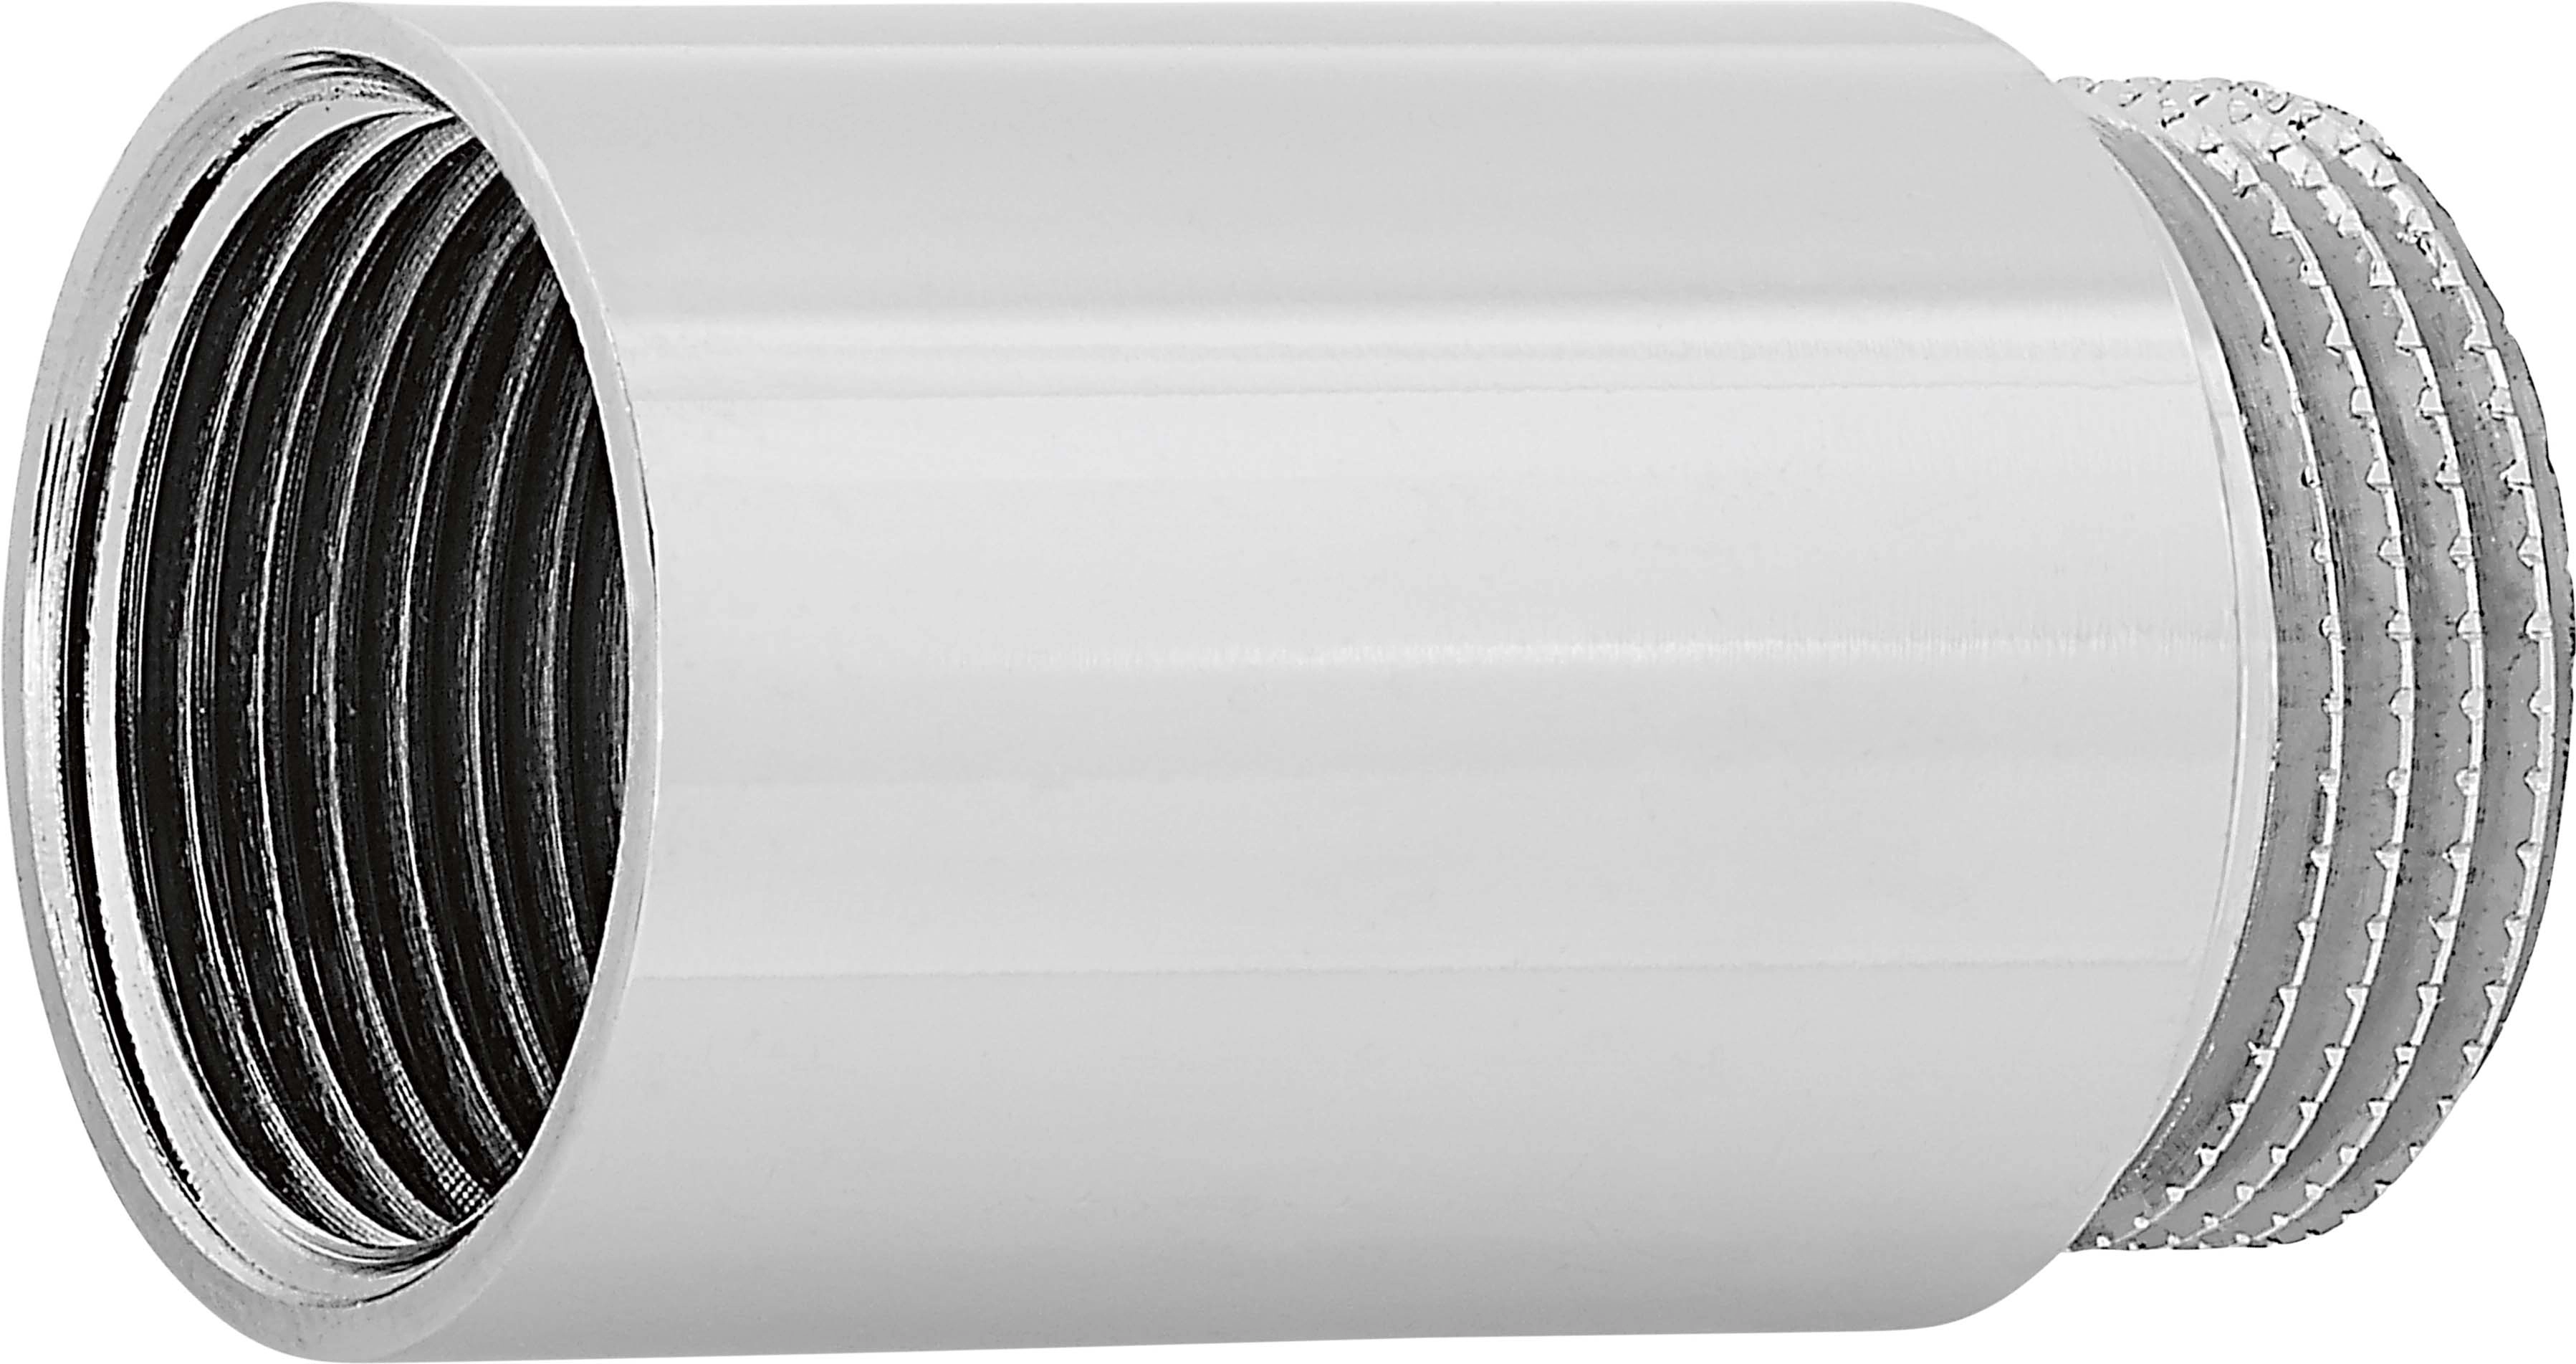 Rallonge de robinet Chrome 24,1 mm (Rp 3/4) / 26,4 mm (R 3/4) / 40 mm